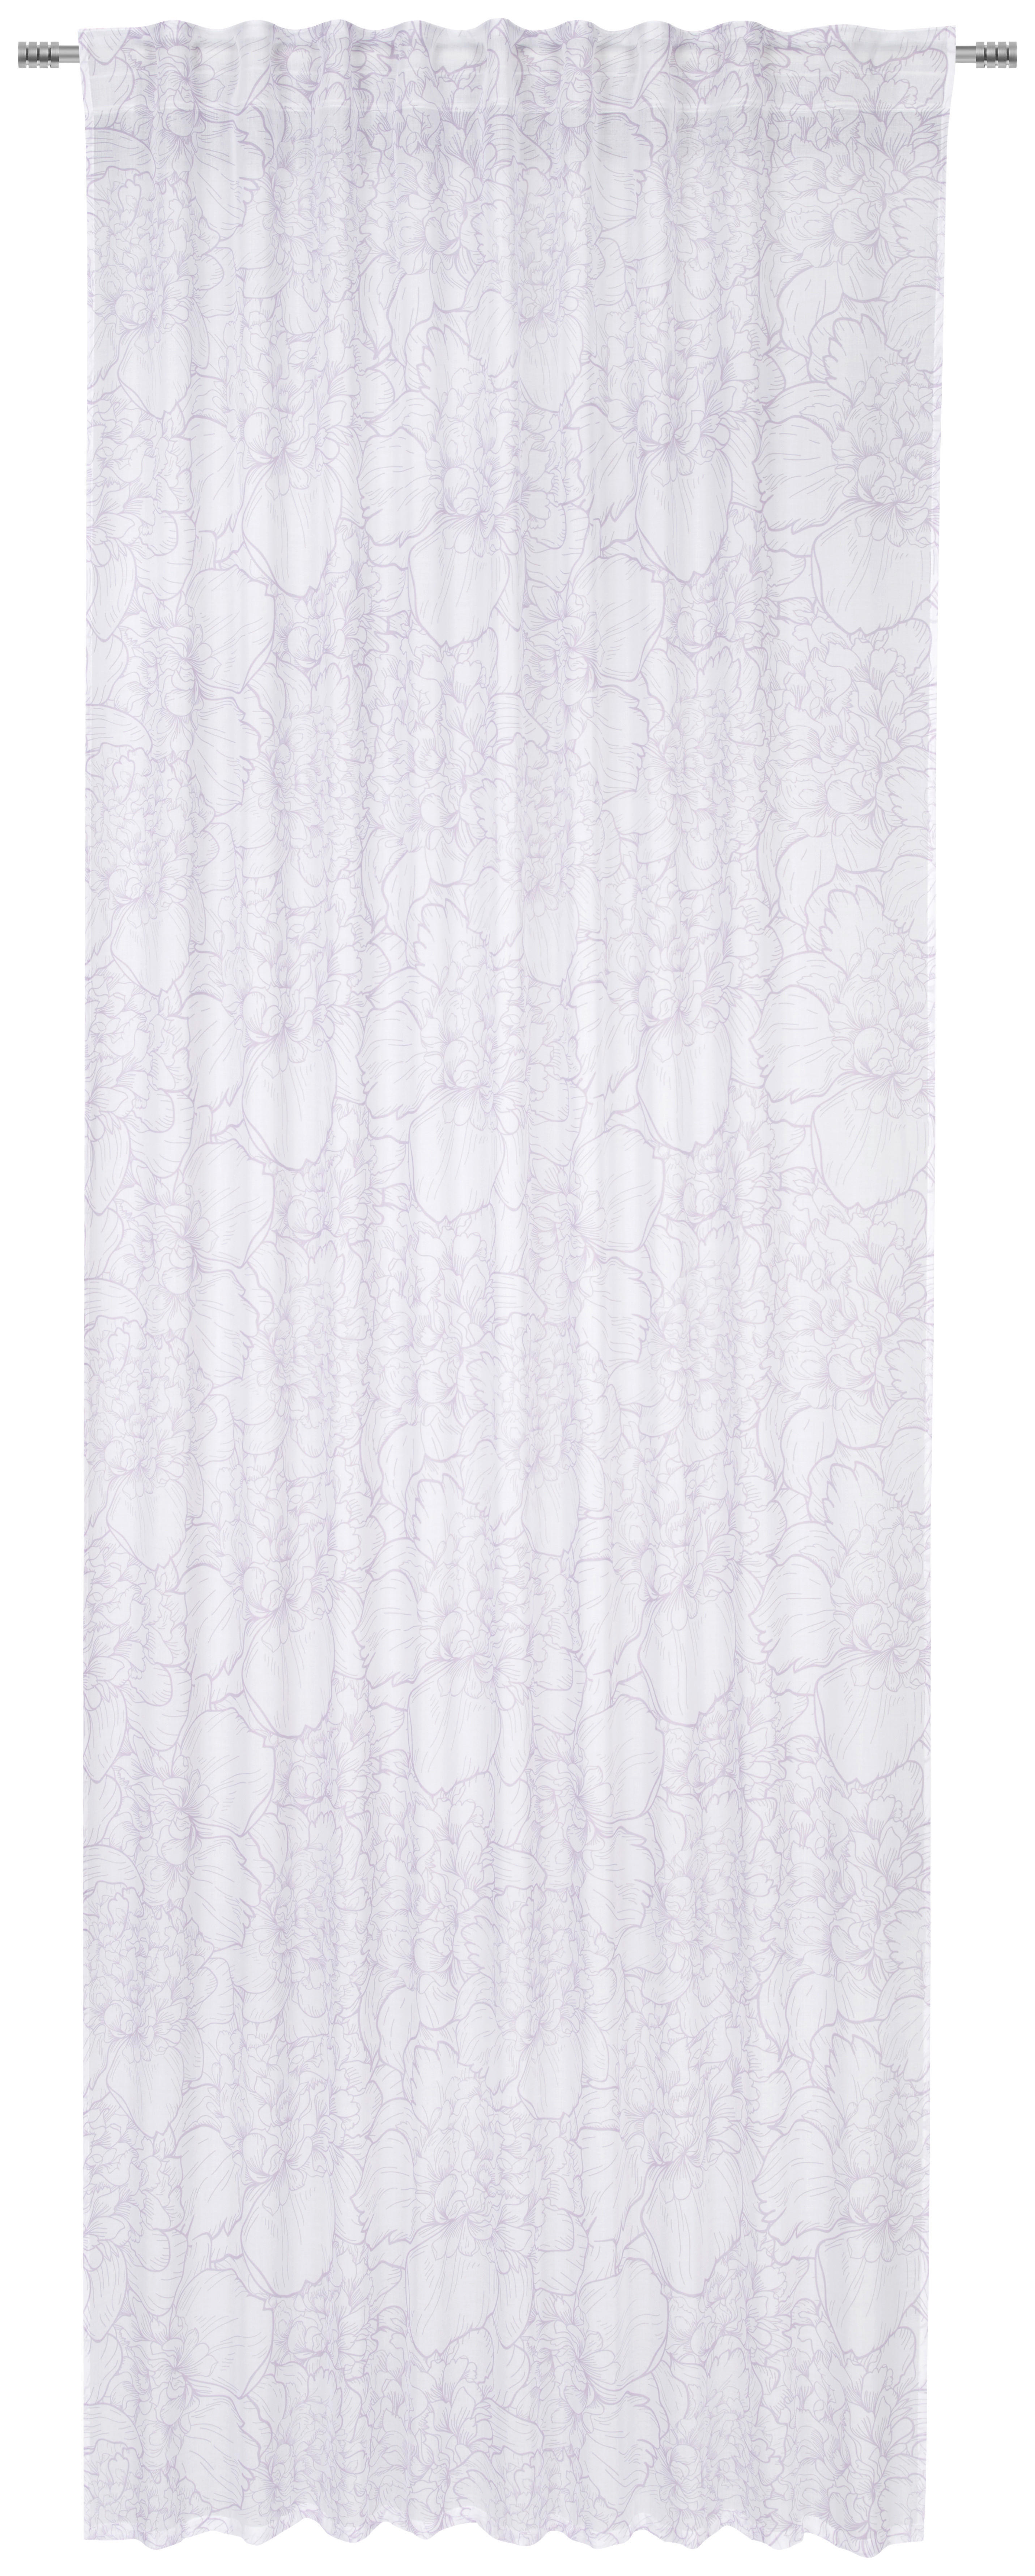 FERTIGVORHANG MAGIC MOMENTS halbtransparent 140/245 cm   - Weiß, LIFESTYLE, Textil (140/245cm) - Esposa